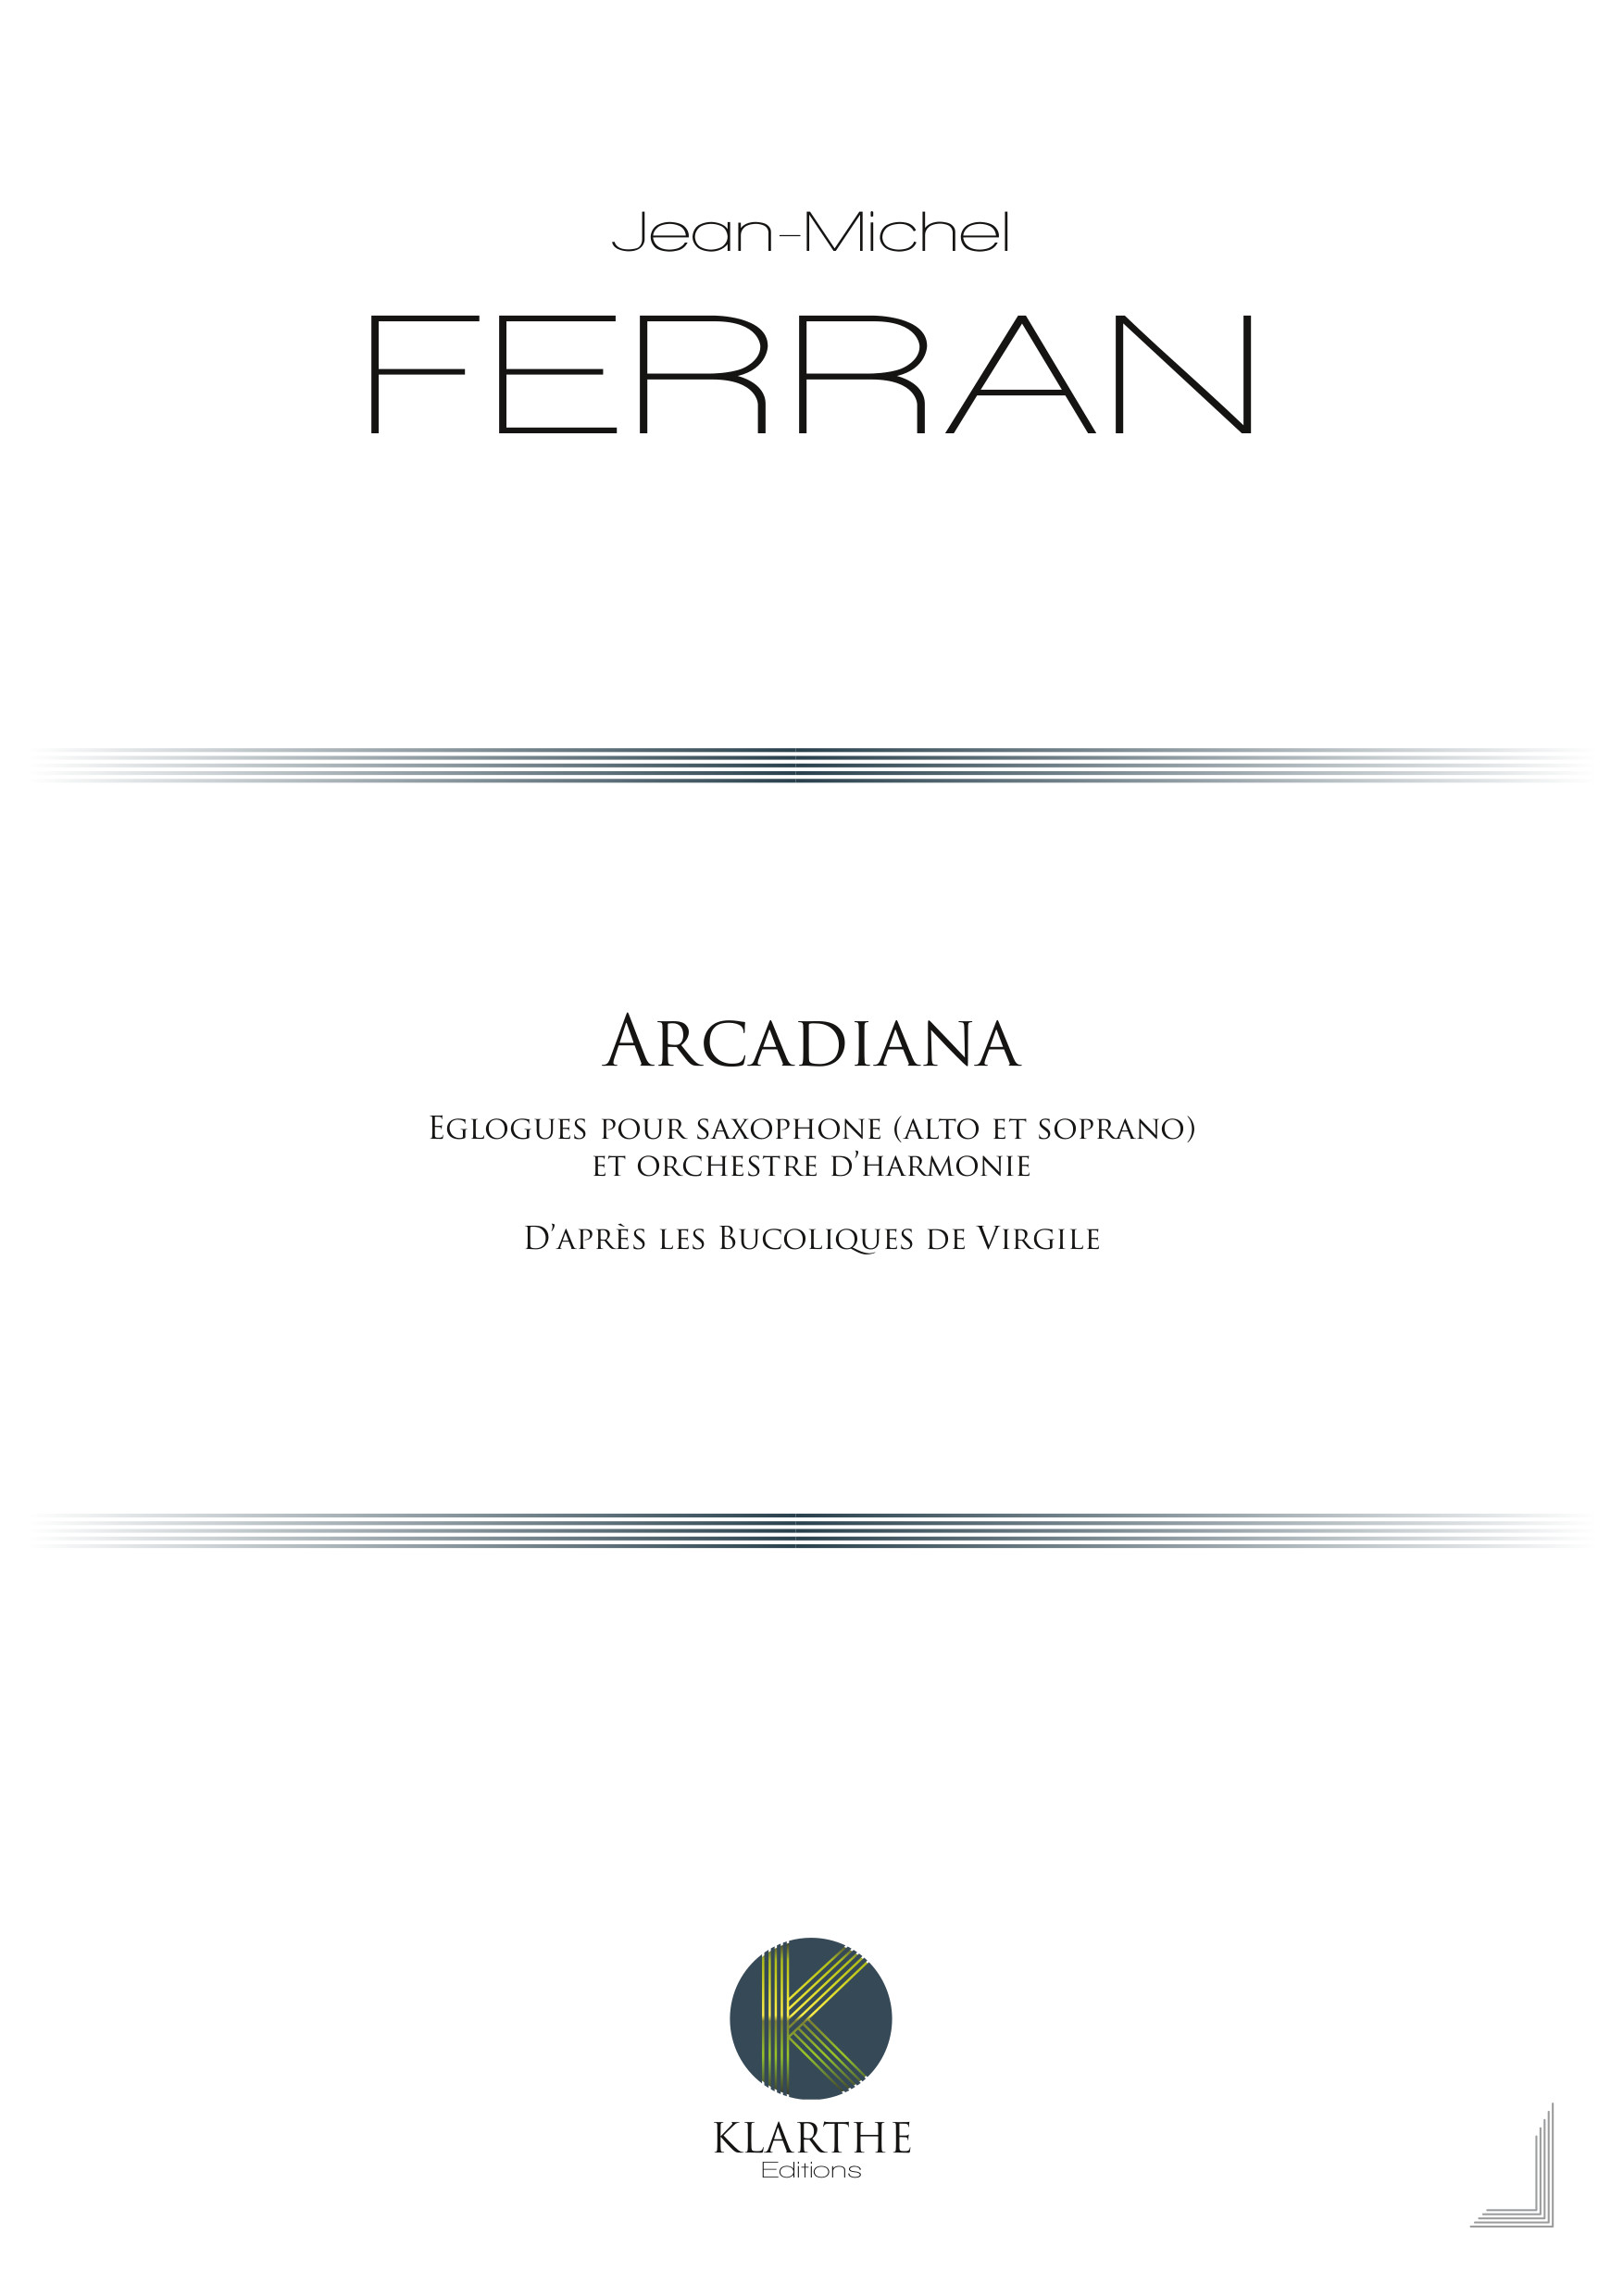 Arcadiana (FERRAN JEAN-MICHEL)